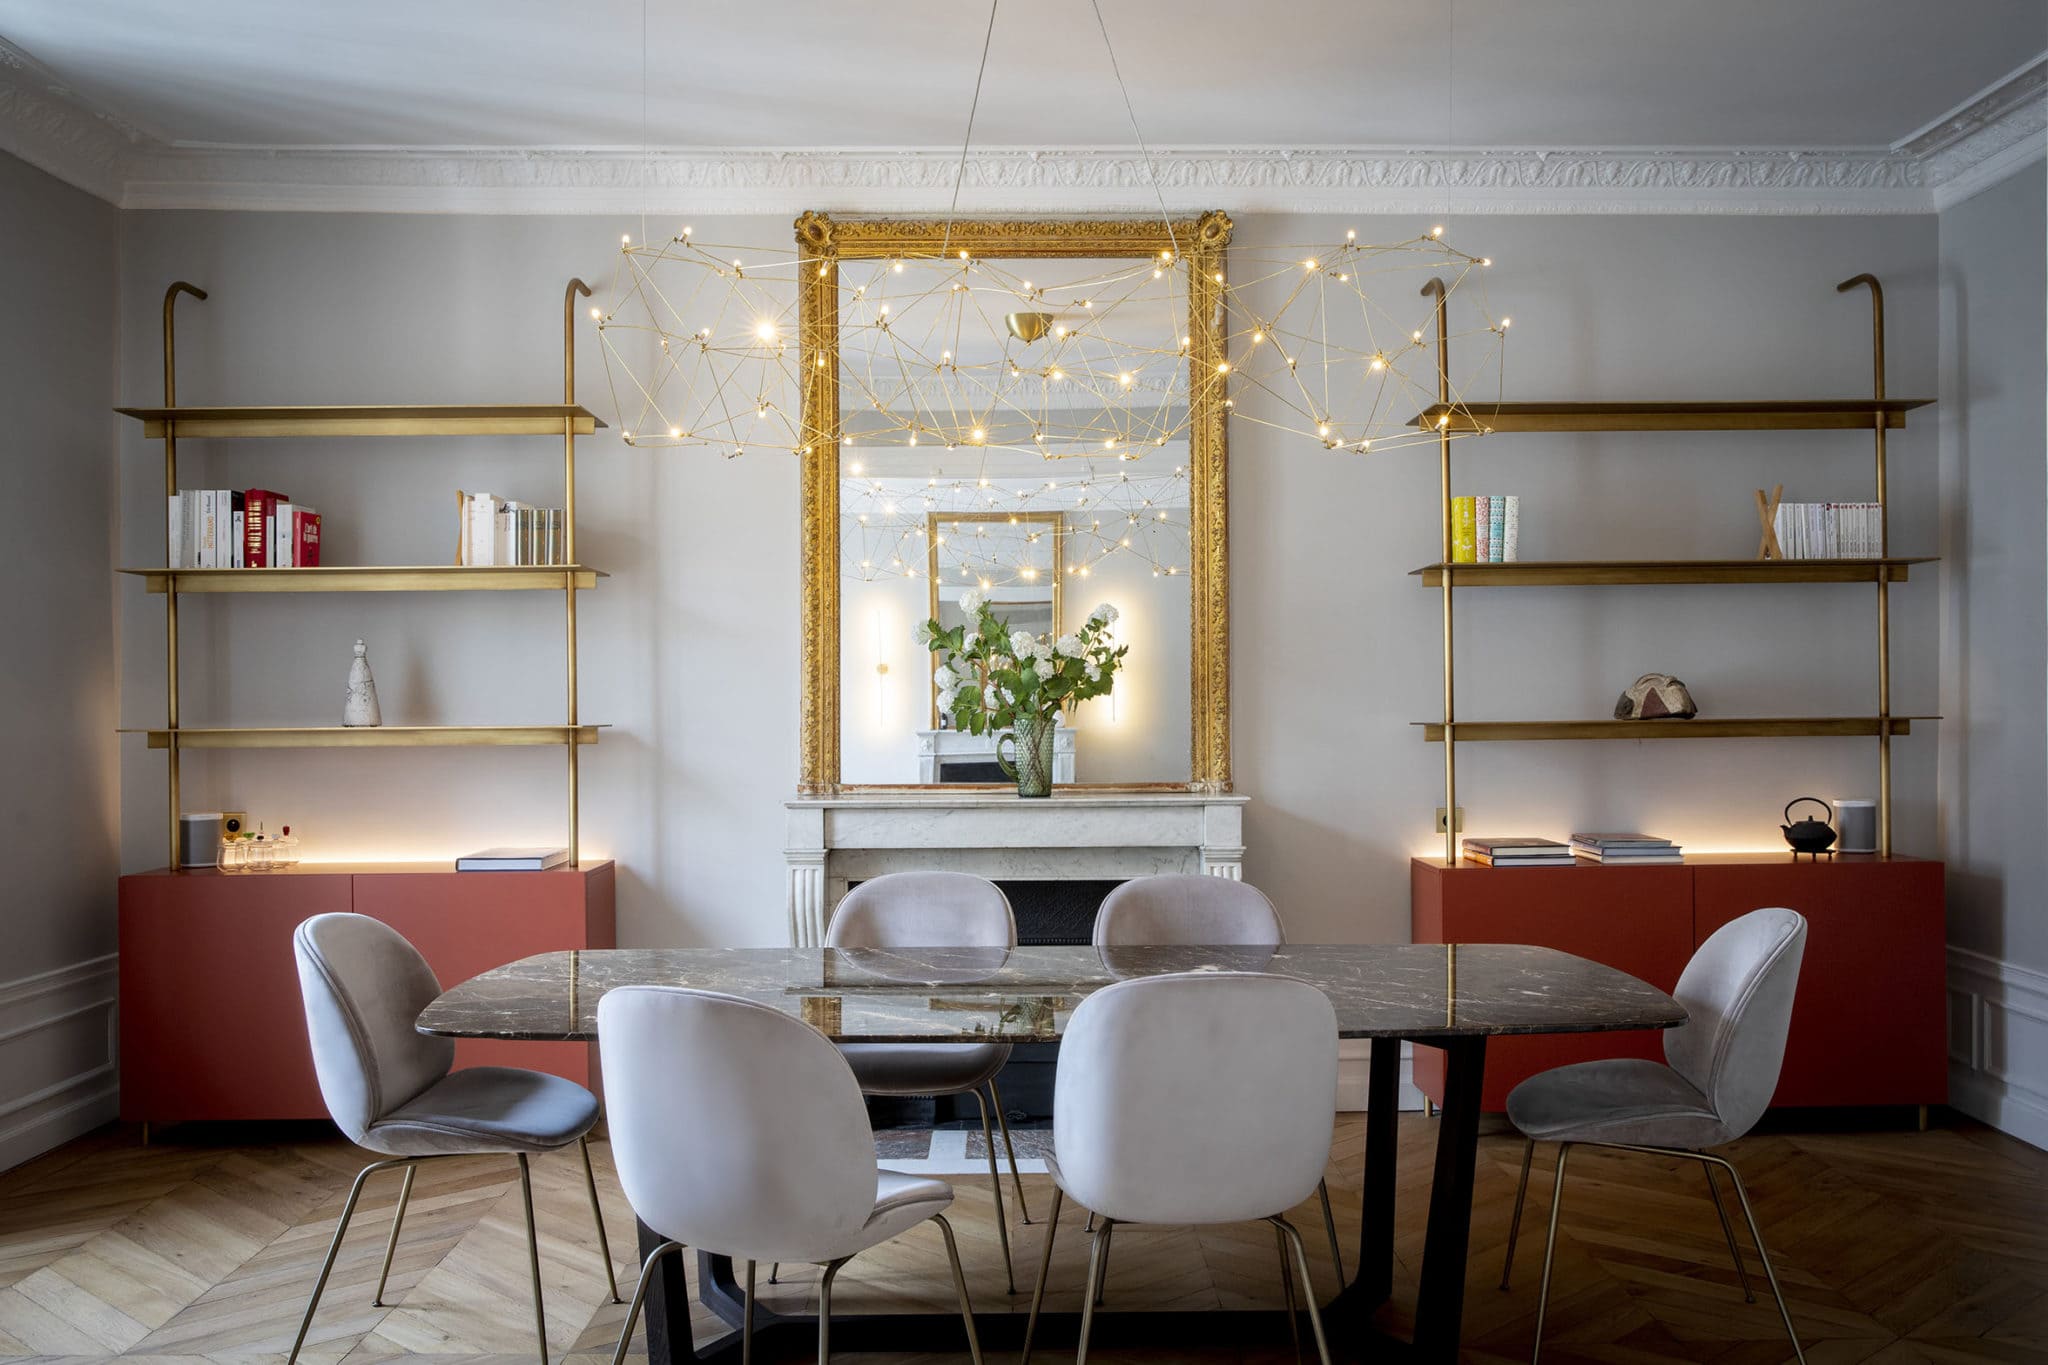 Lighting design for a chic Parisian apartment